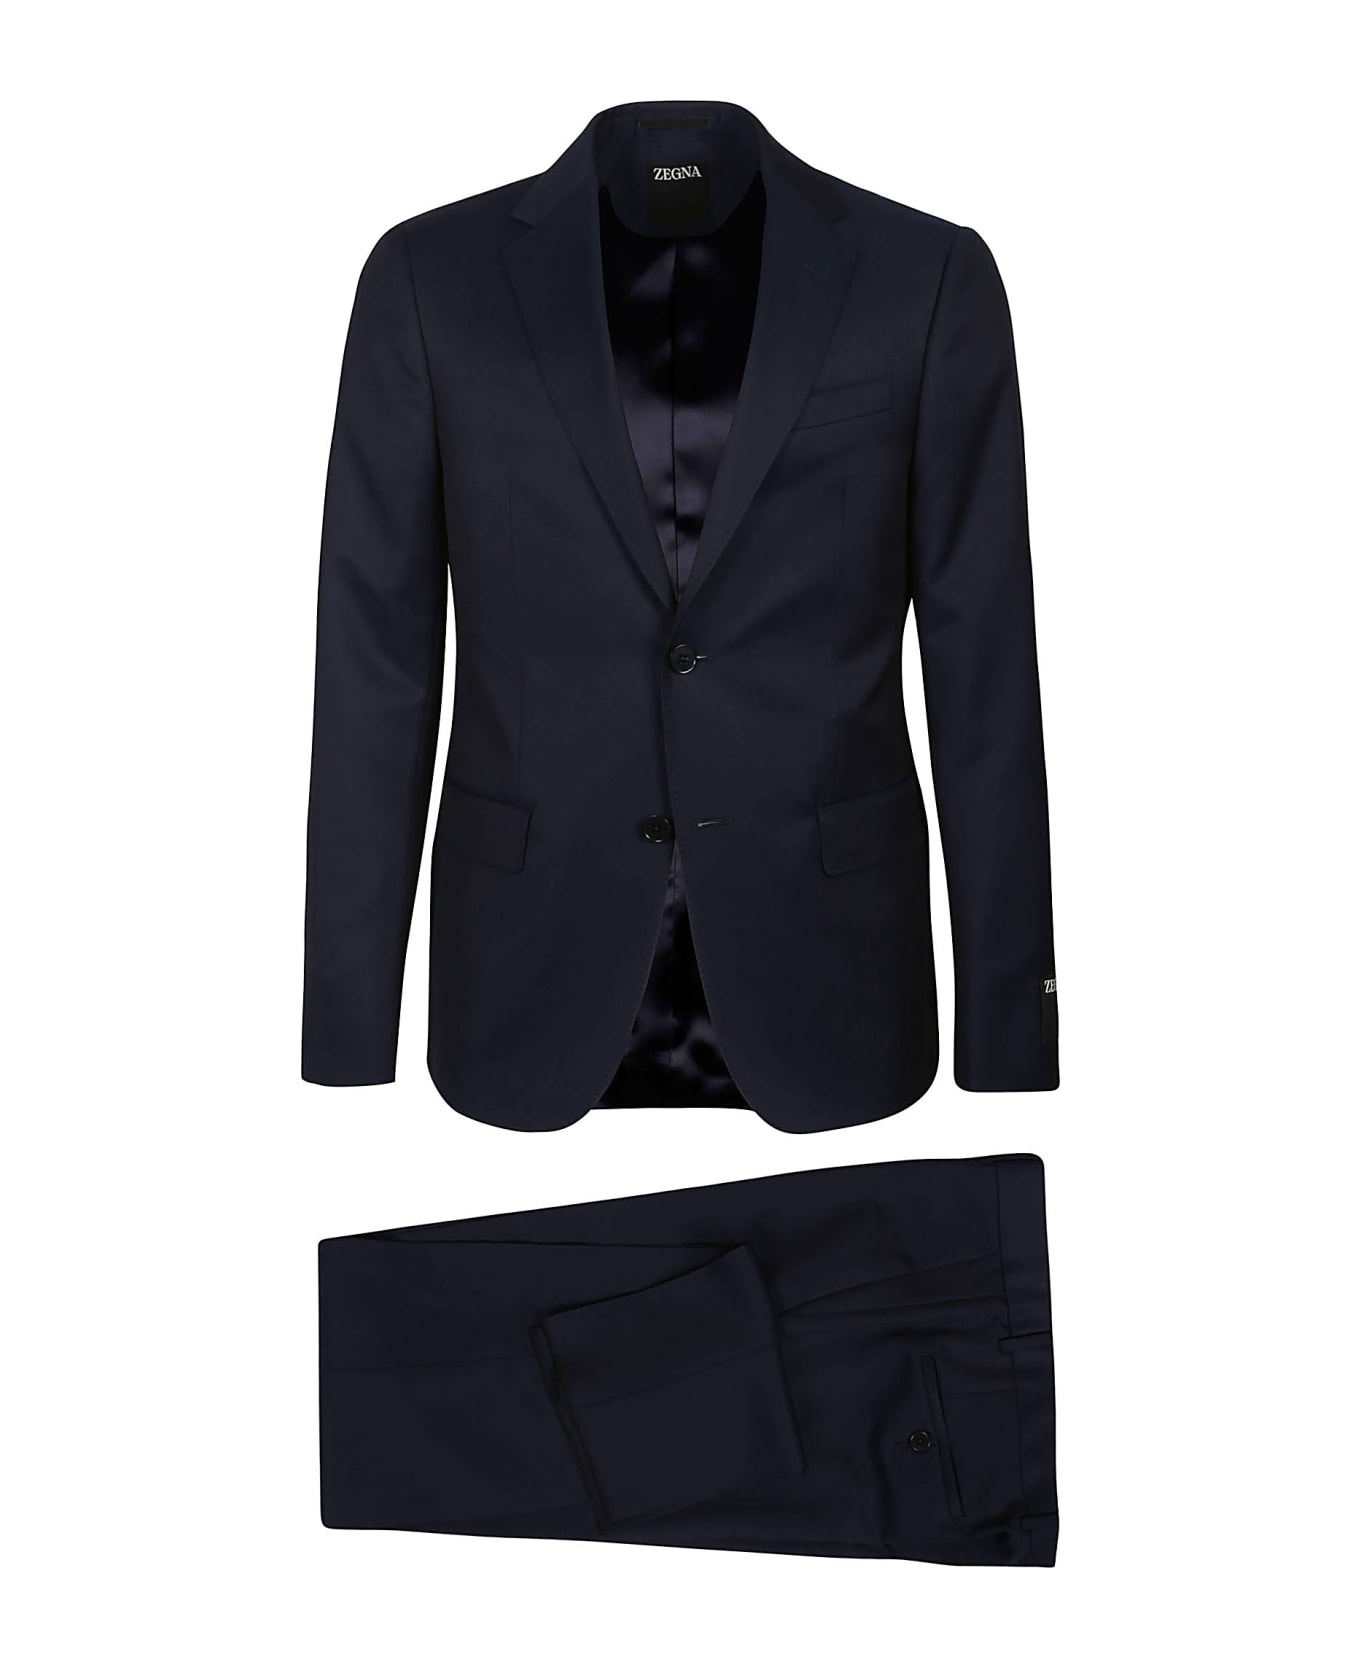 Zegna Luxx Tailoring Suit - Navy スーツ